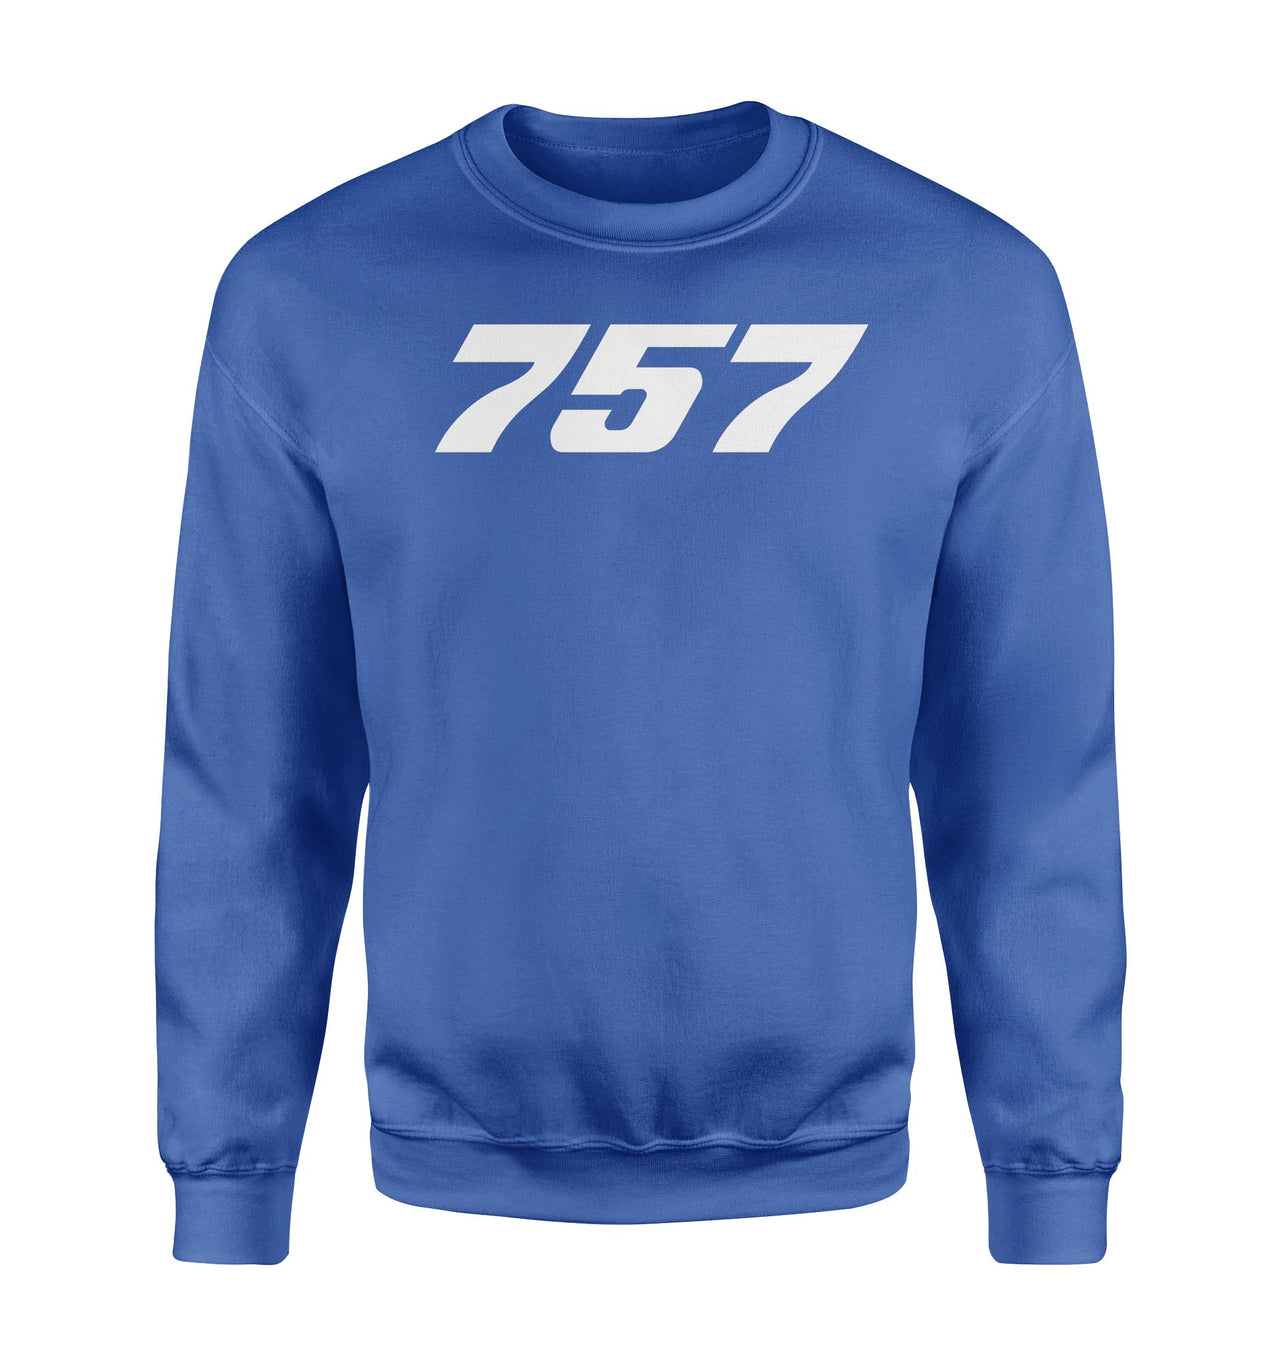 757 Flat Text Designed Sweatshirts